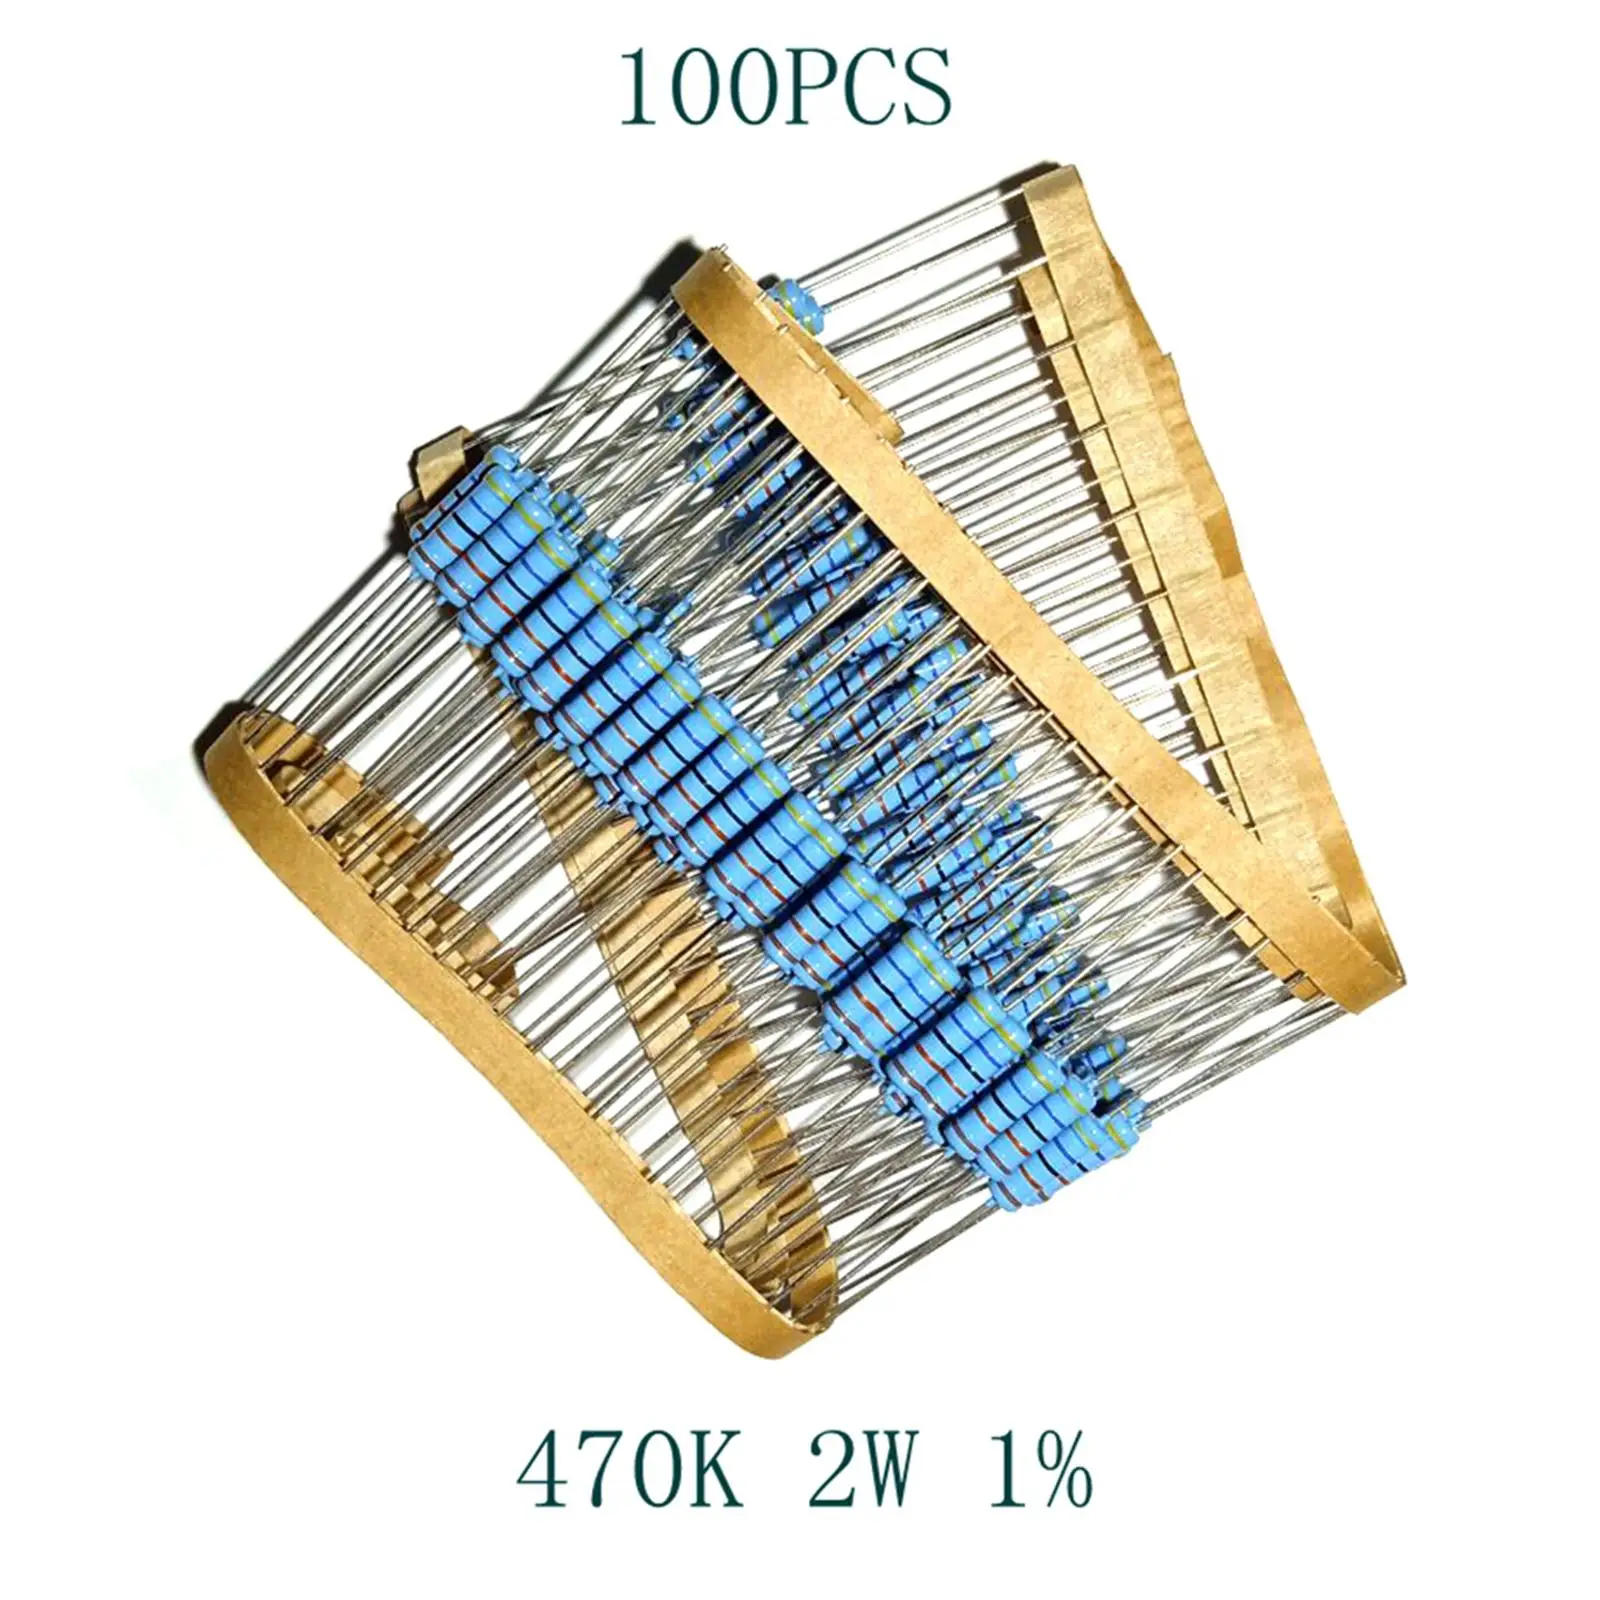 100Pcs Film Resistors Multipurpose for Instrument Power Supplies TV DIY Projects images - 6